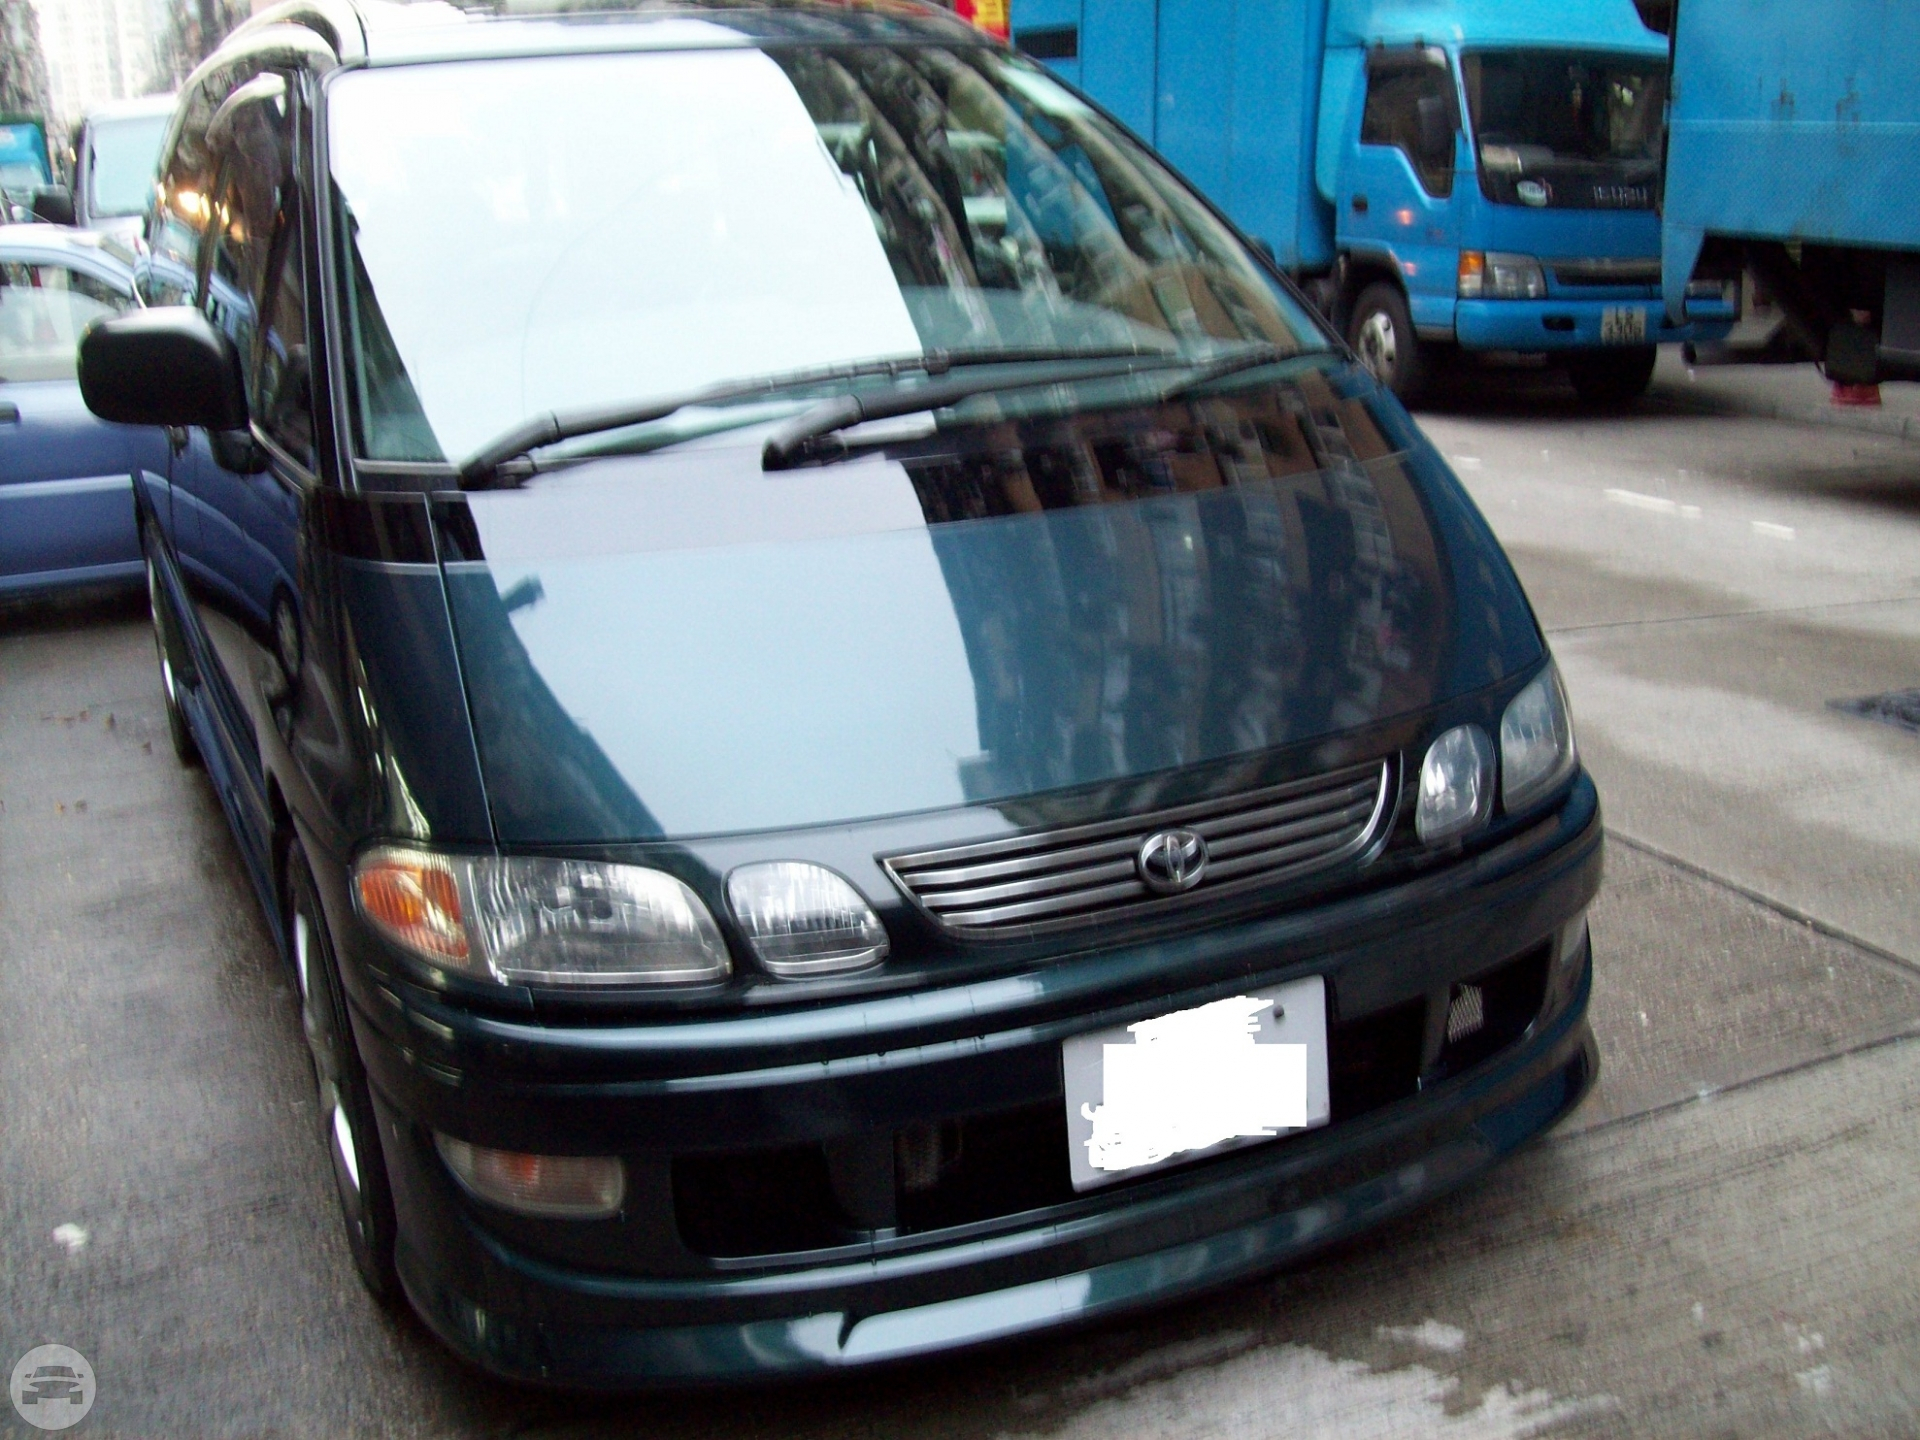 Toyota LUCIDA 2.4	
Van /
Kowloon, Hong Kong

 / Hourly HKD 0.00
